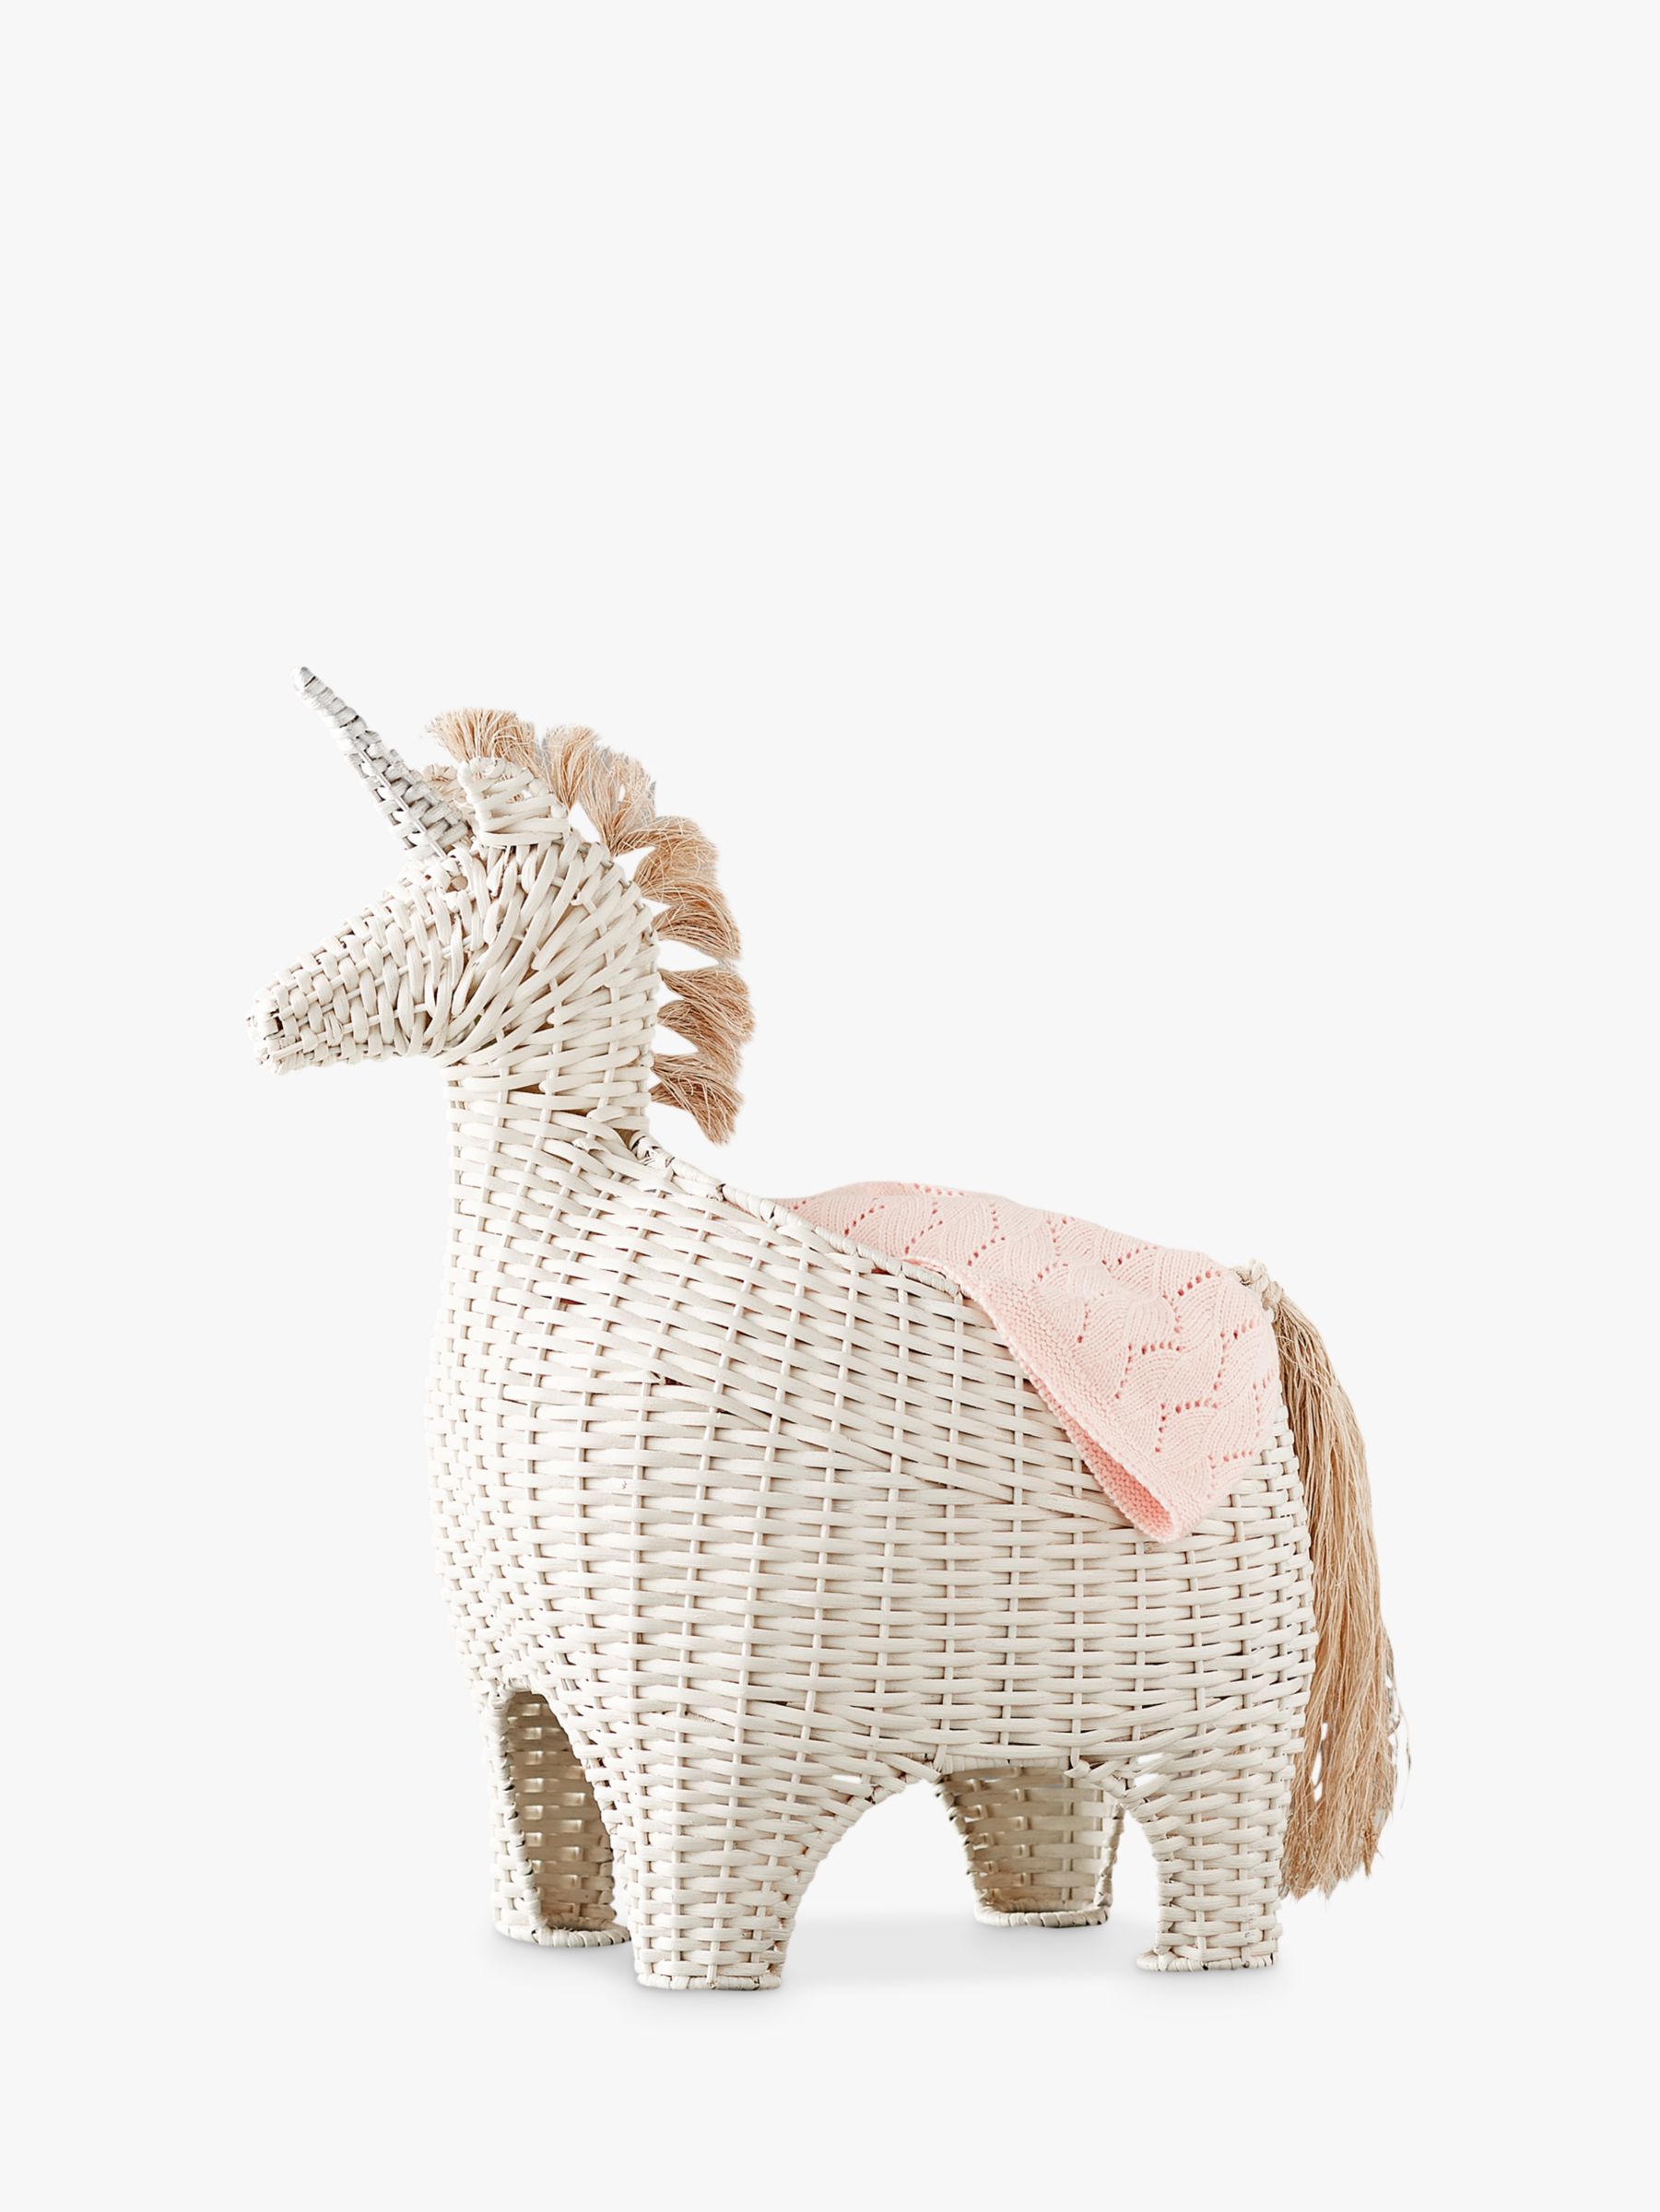 unicorn storage basket